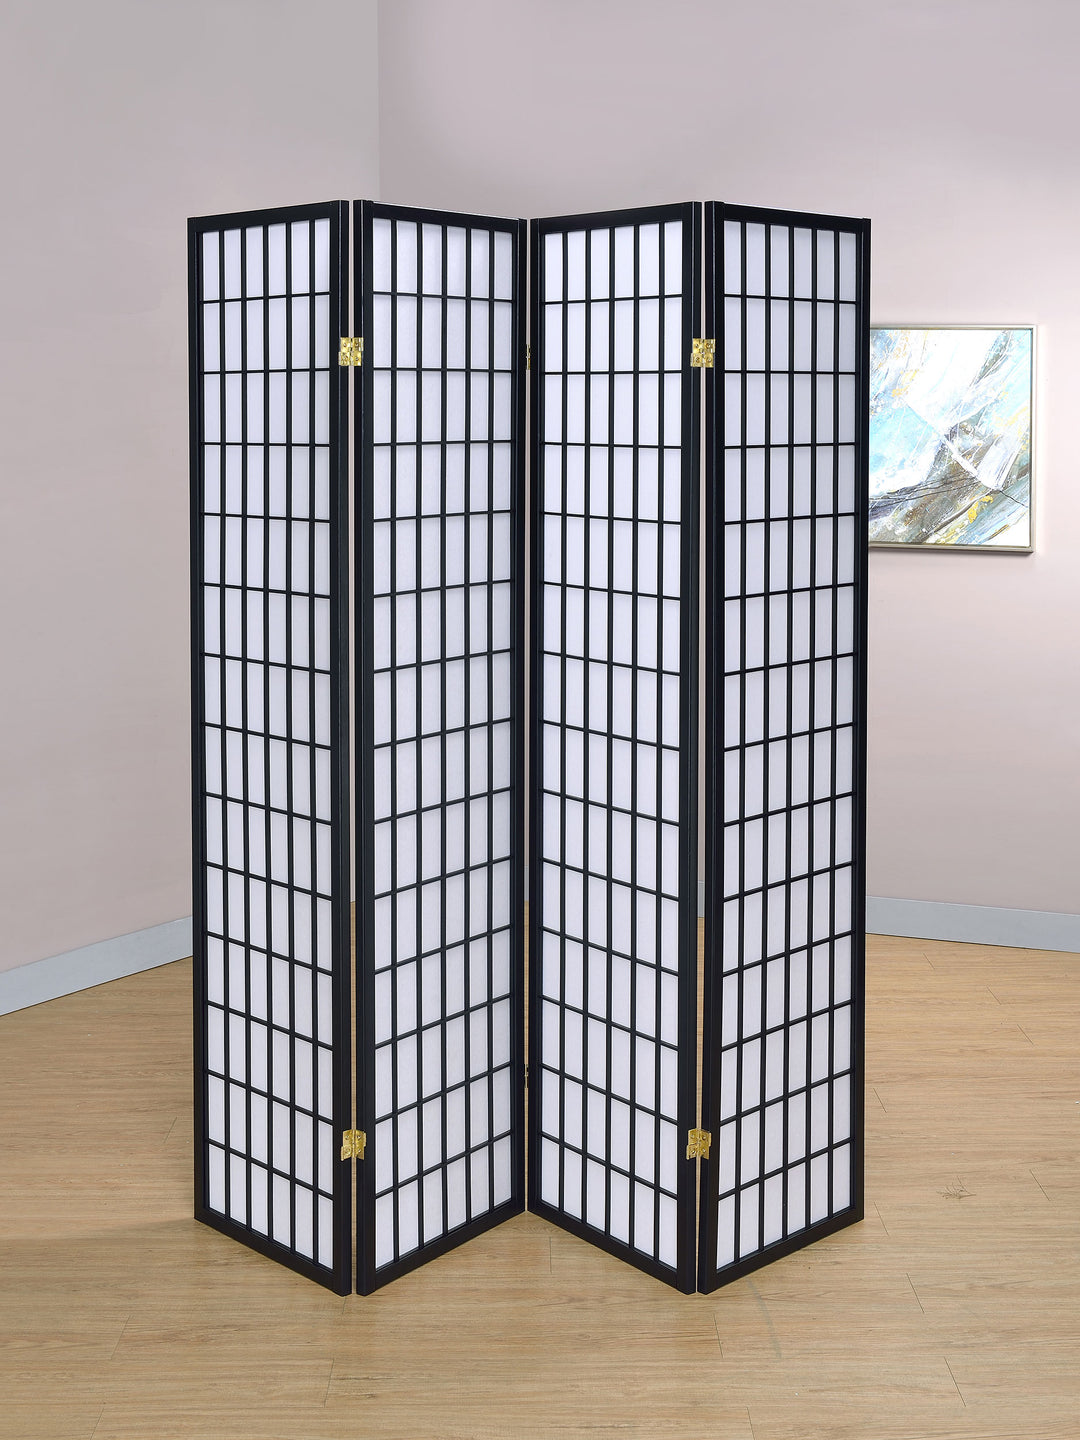 Roberto 4-panel Folding Screen Black and White